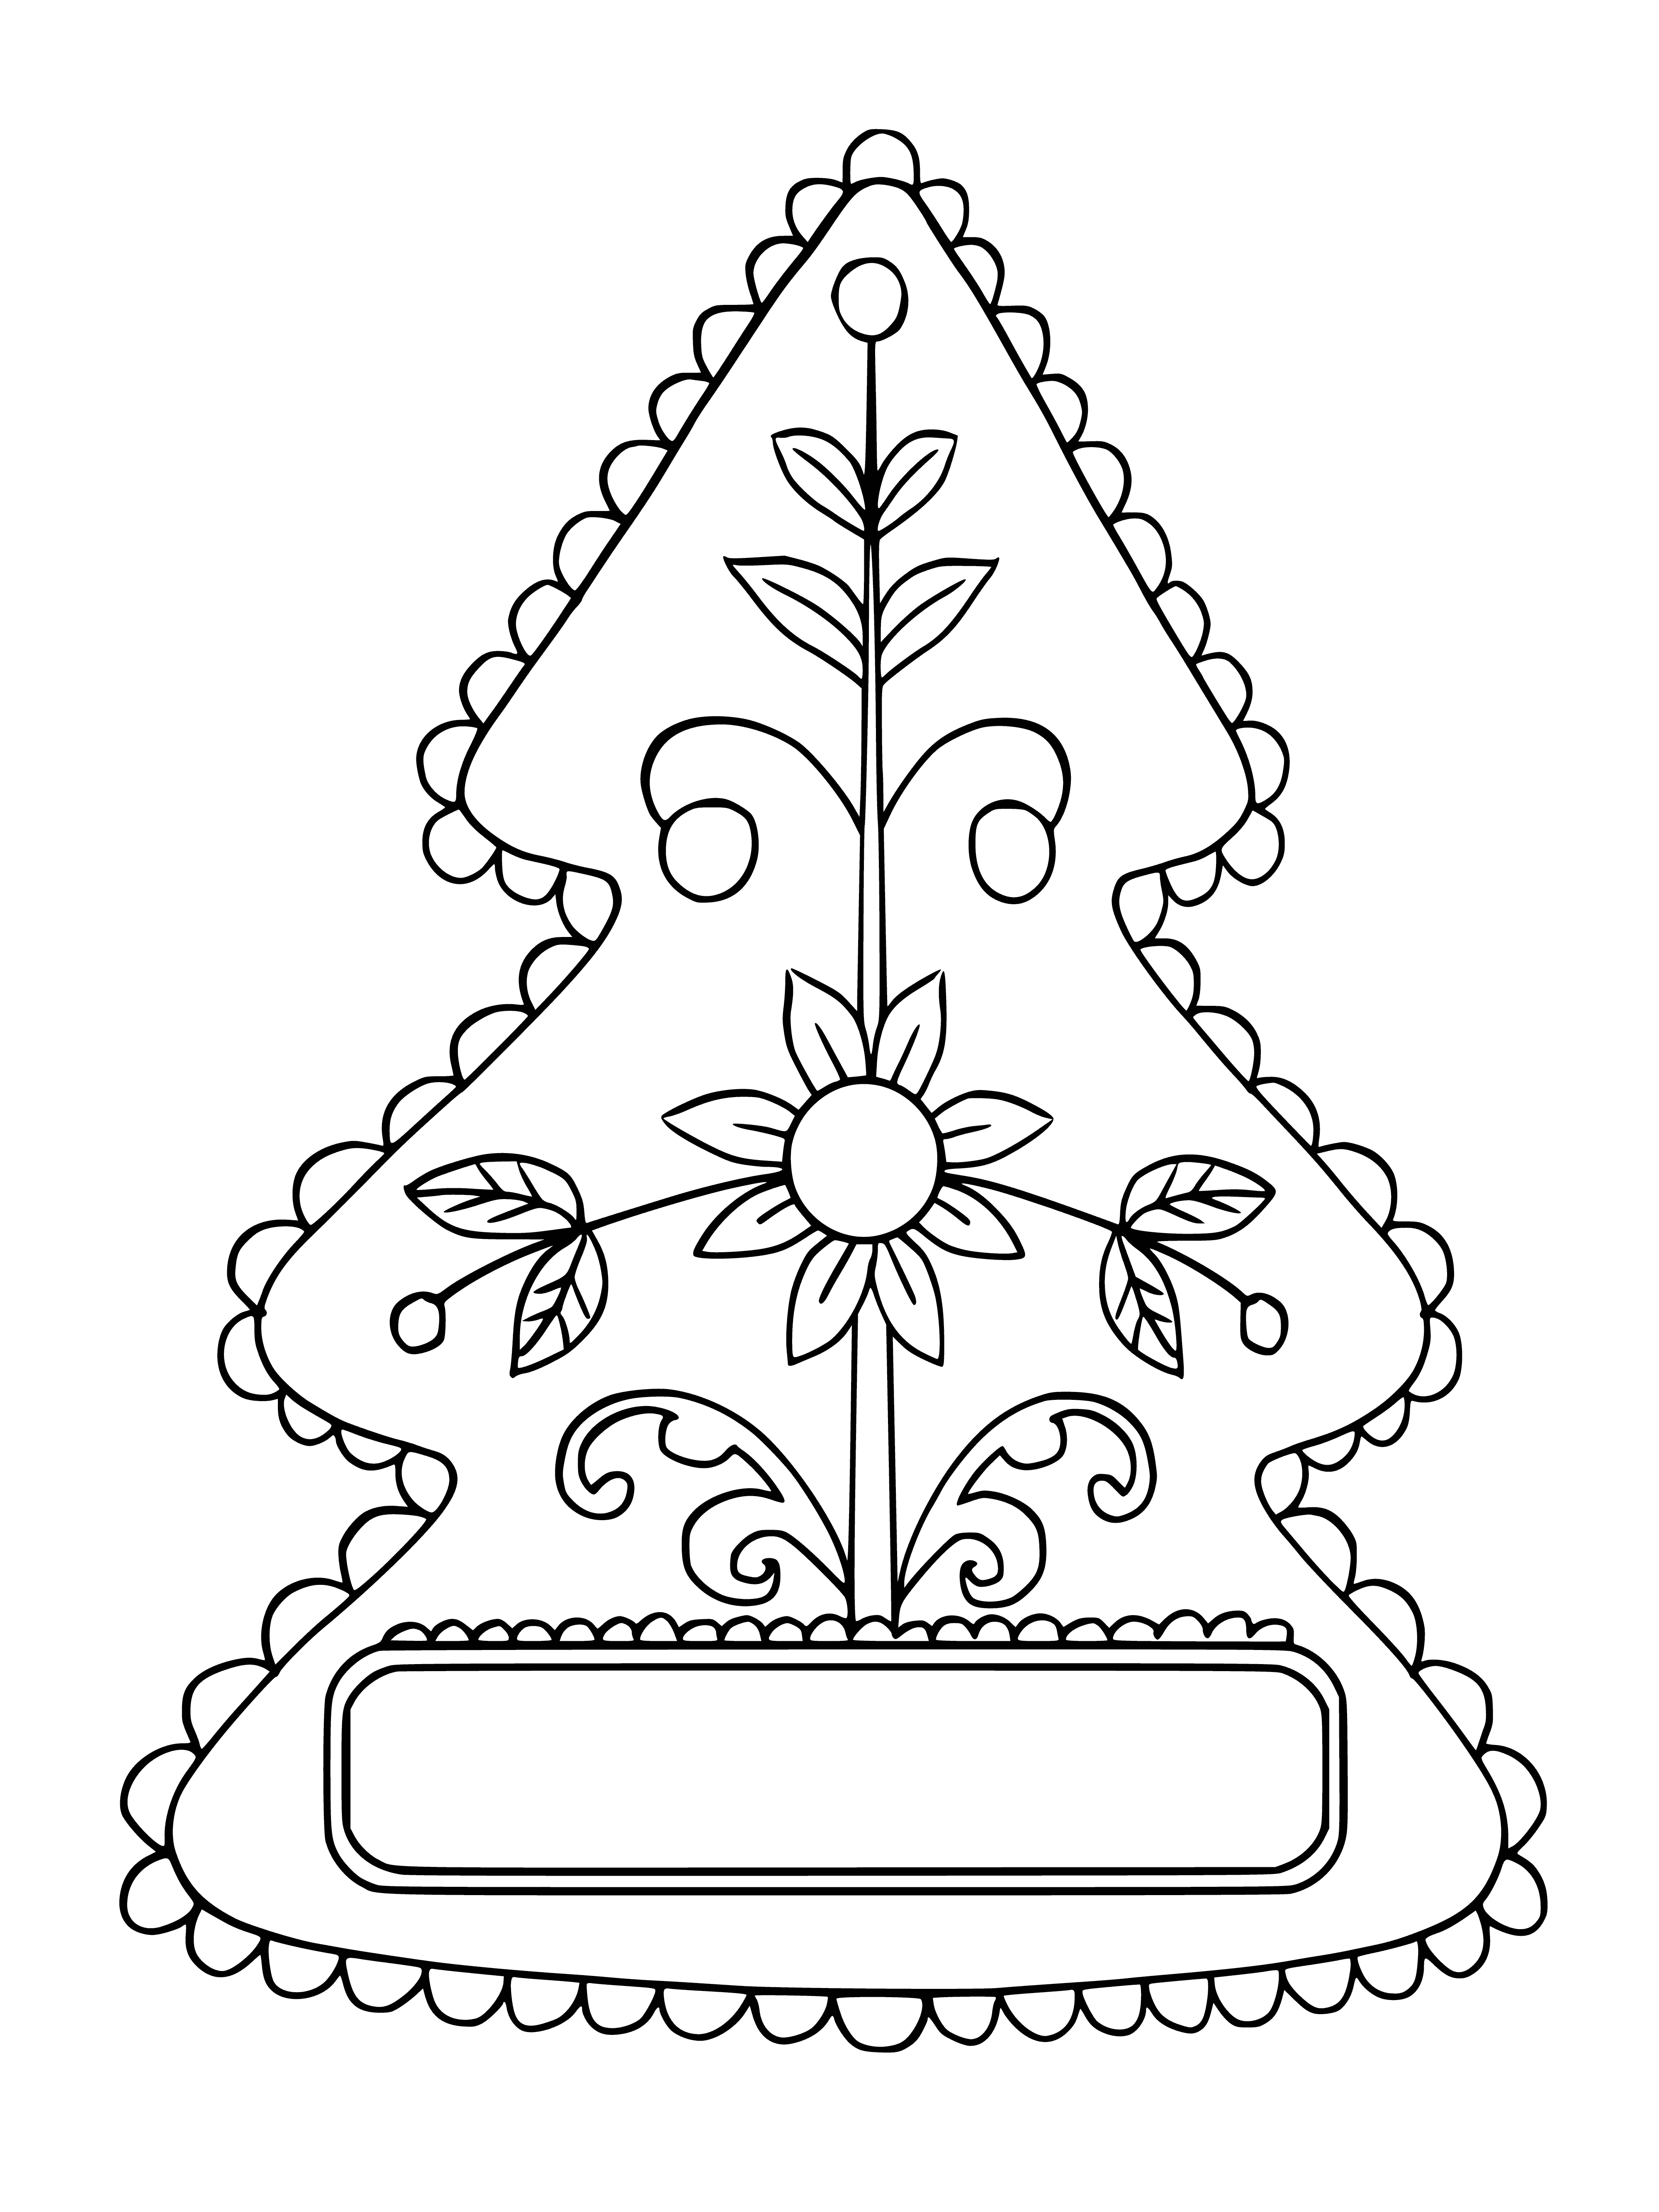 kerstboom kleurplaat